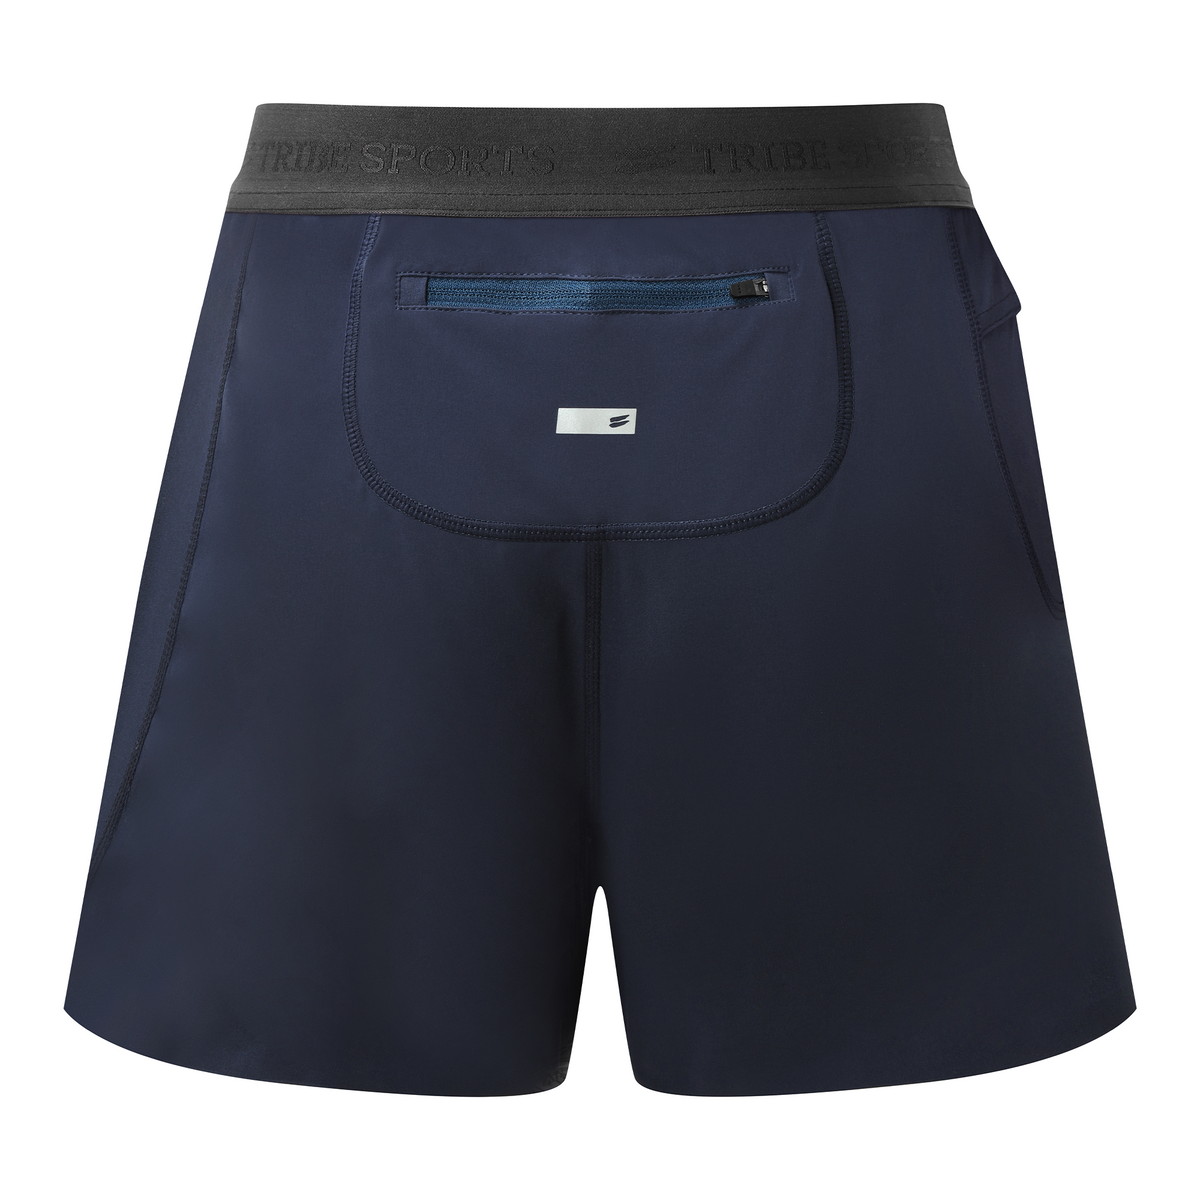 Endure Swift Shorts - Navy/Charcoal